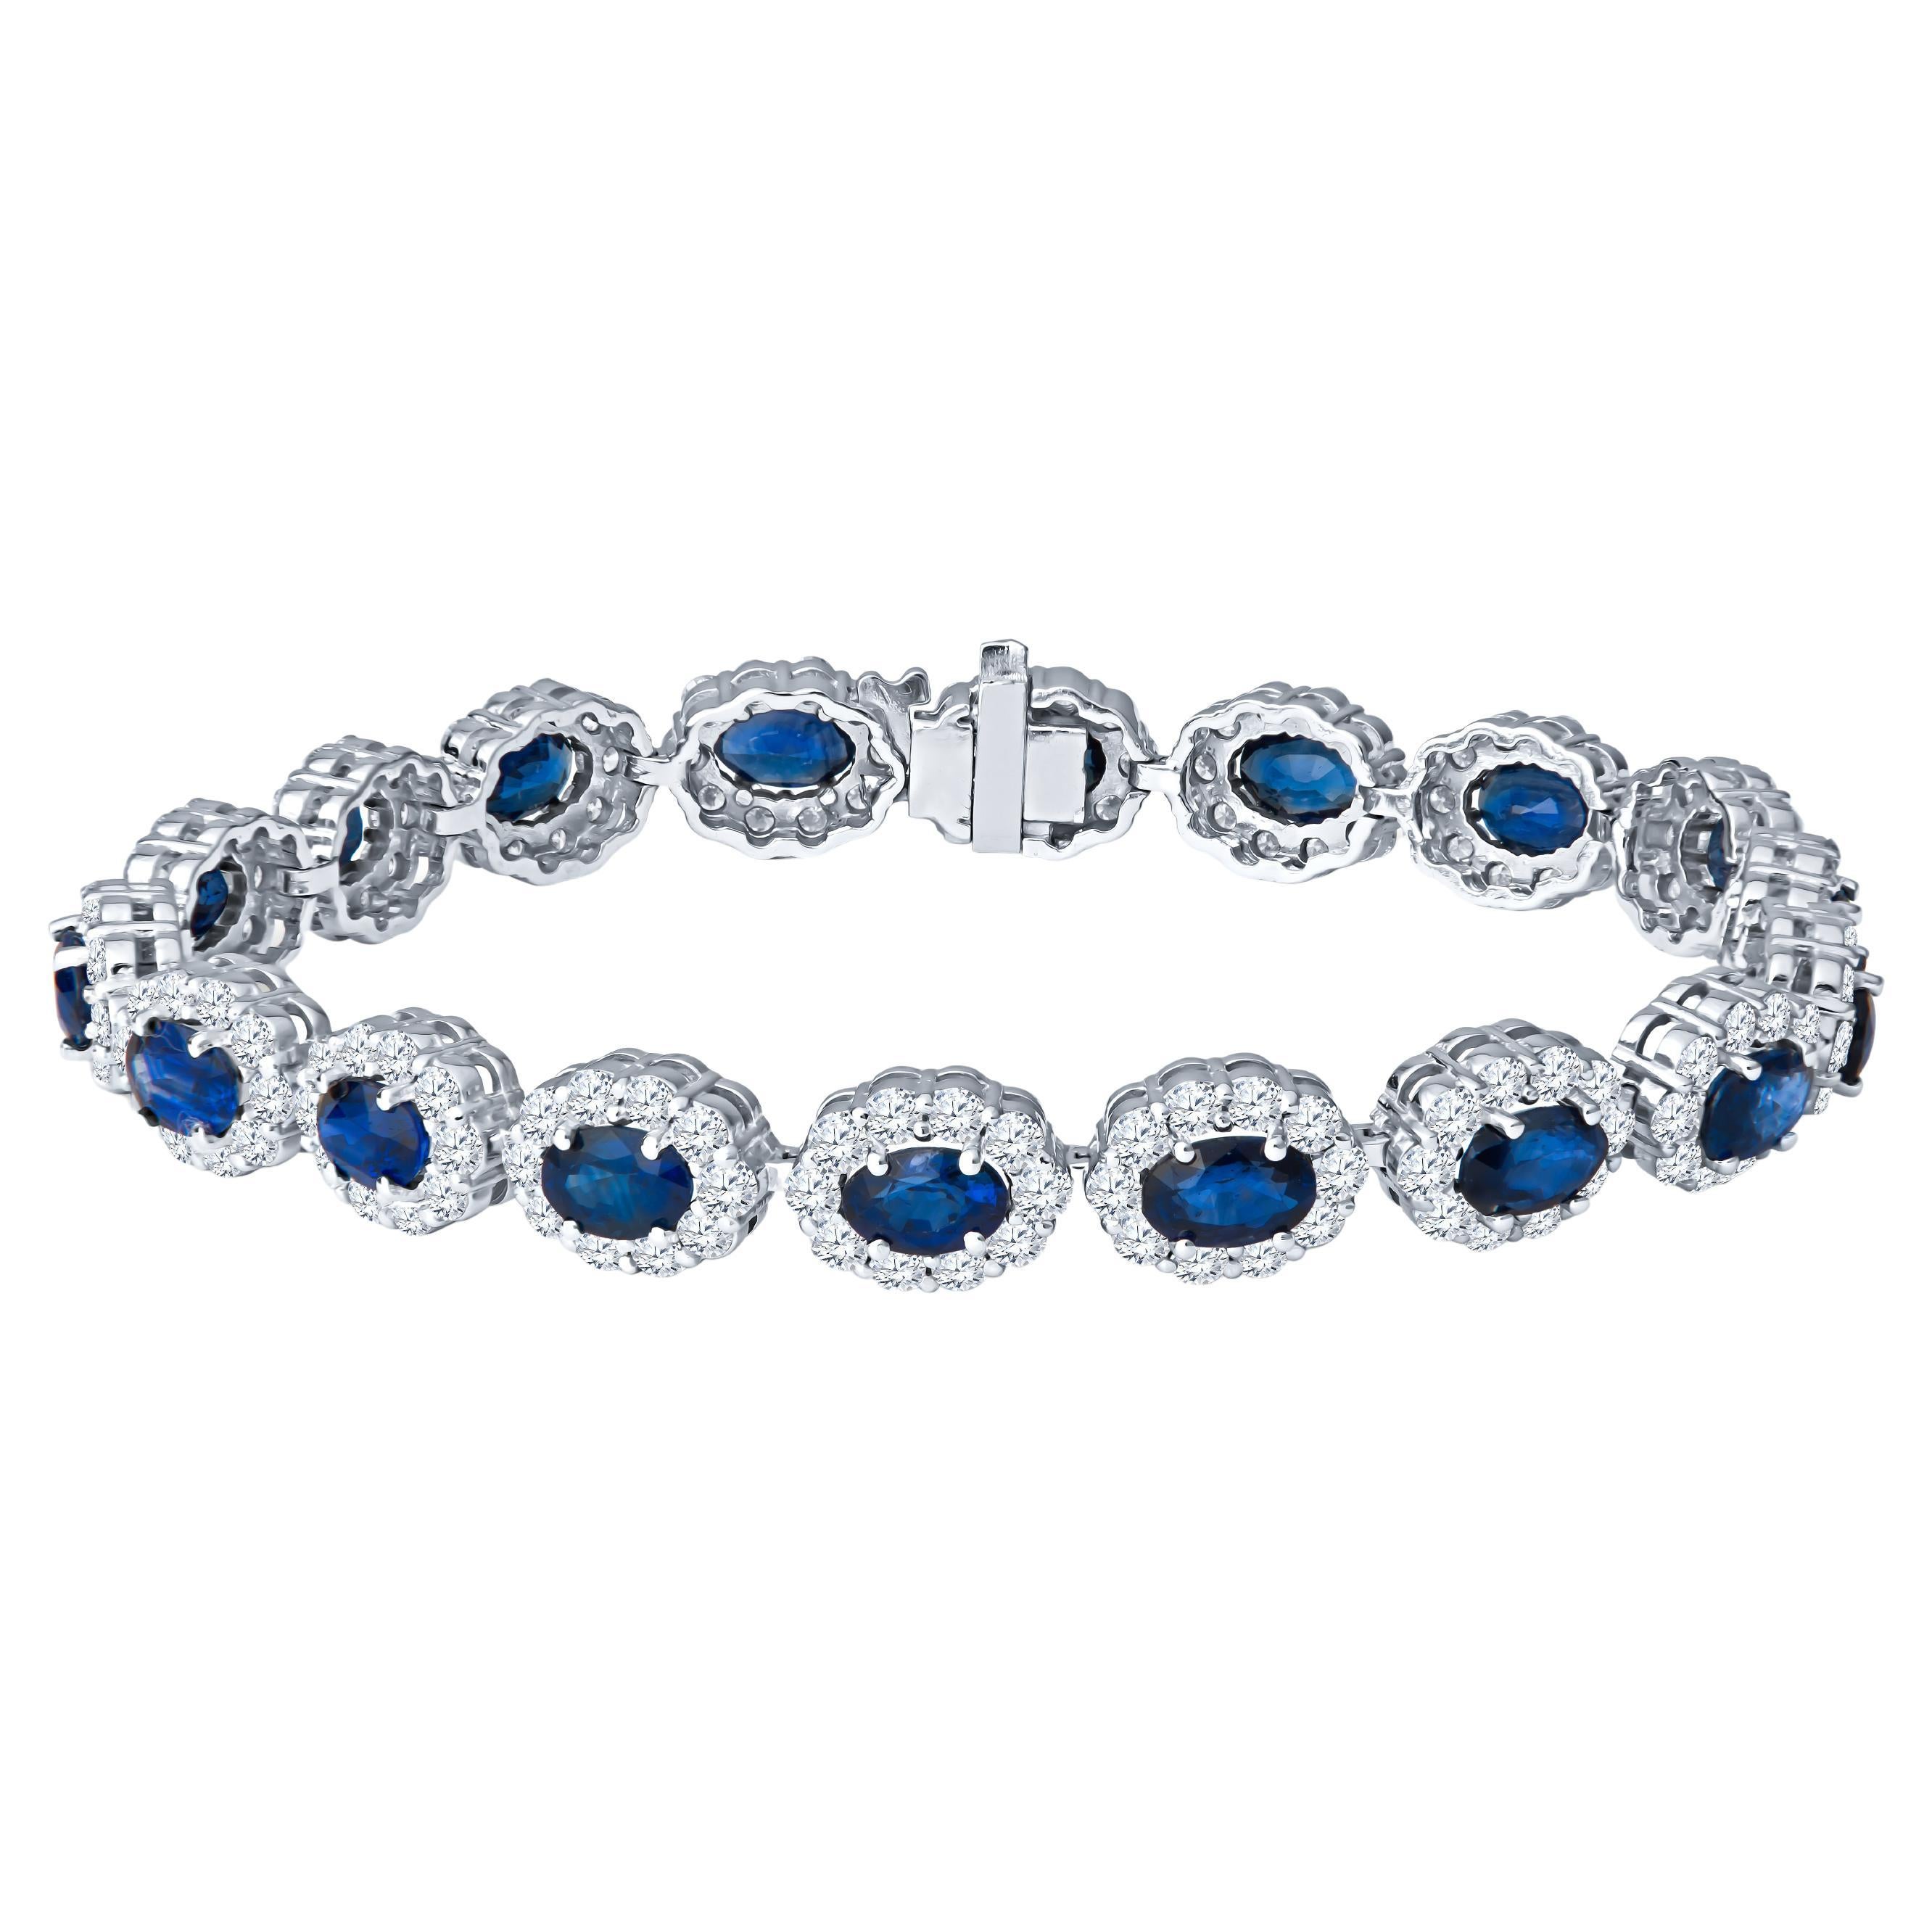 6.67 Carat Total Weight Natural Blue Oval Cut Sapphire & Diamond Halo Bracelet 